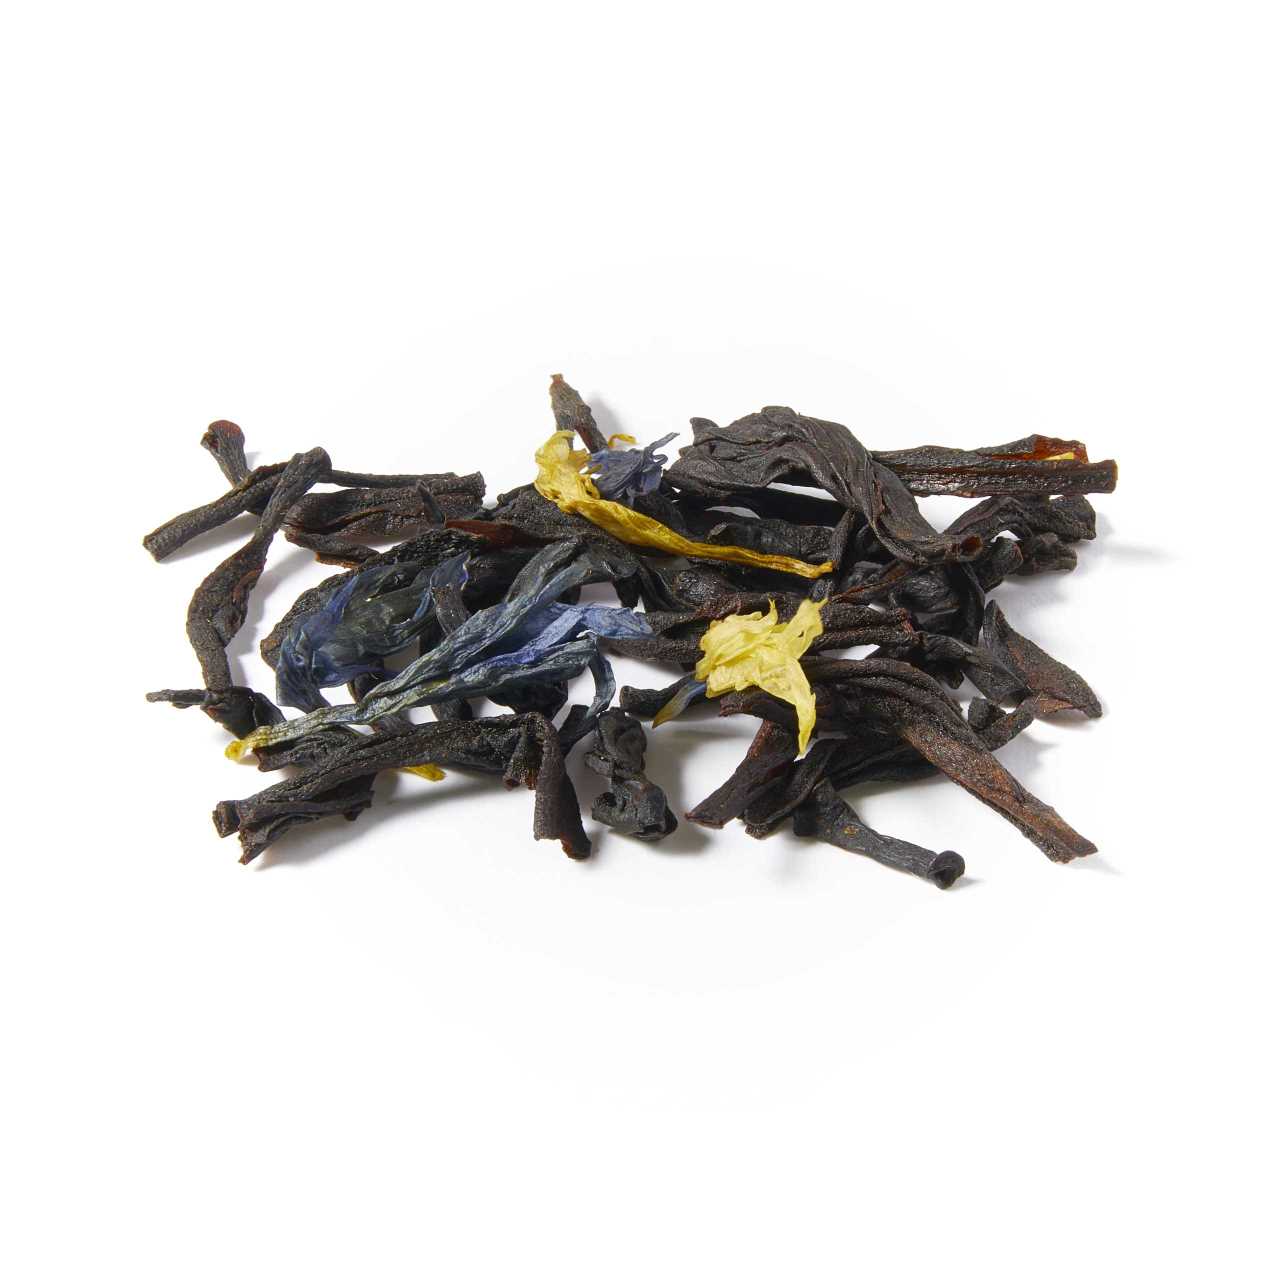 A macro pile of Supreme Earl Grey Loose Leaf Tea